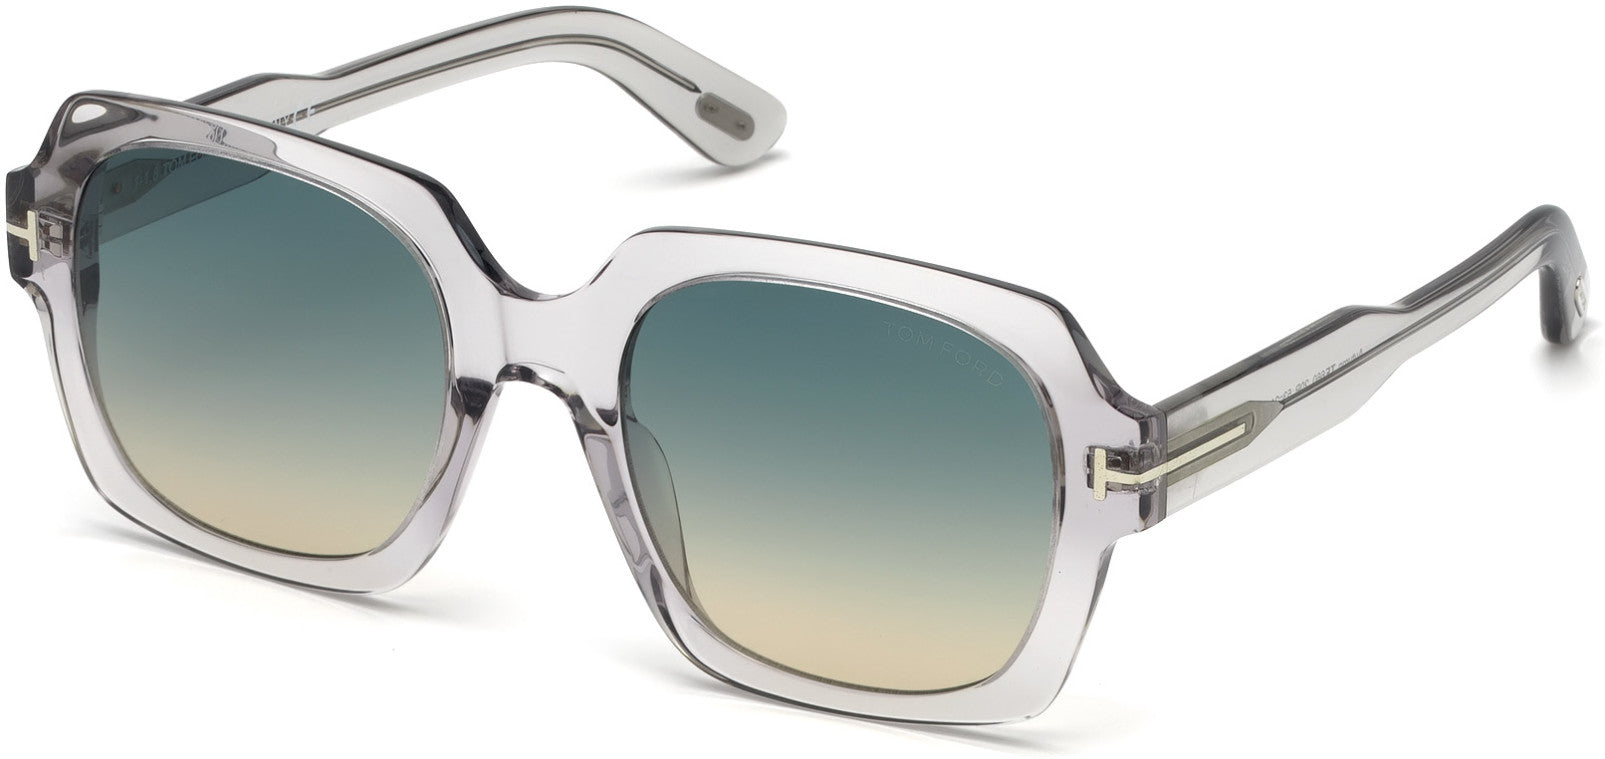 Tom Ford FT0660 Autumn Geometric Sunglasses 20P-20P - Shiny Transparent Grey/ Gradient Turquoise-To-Sand Lenses